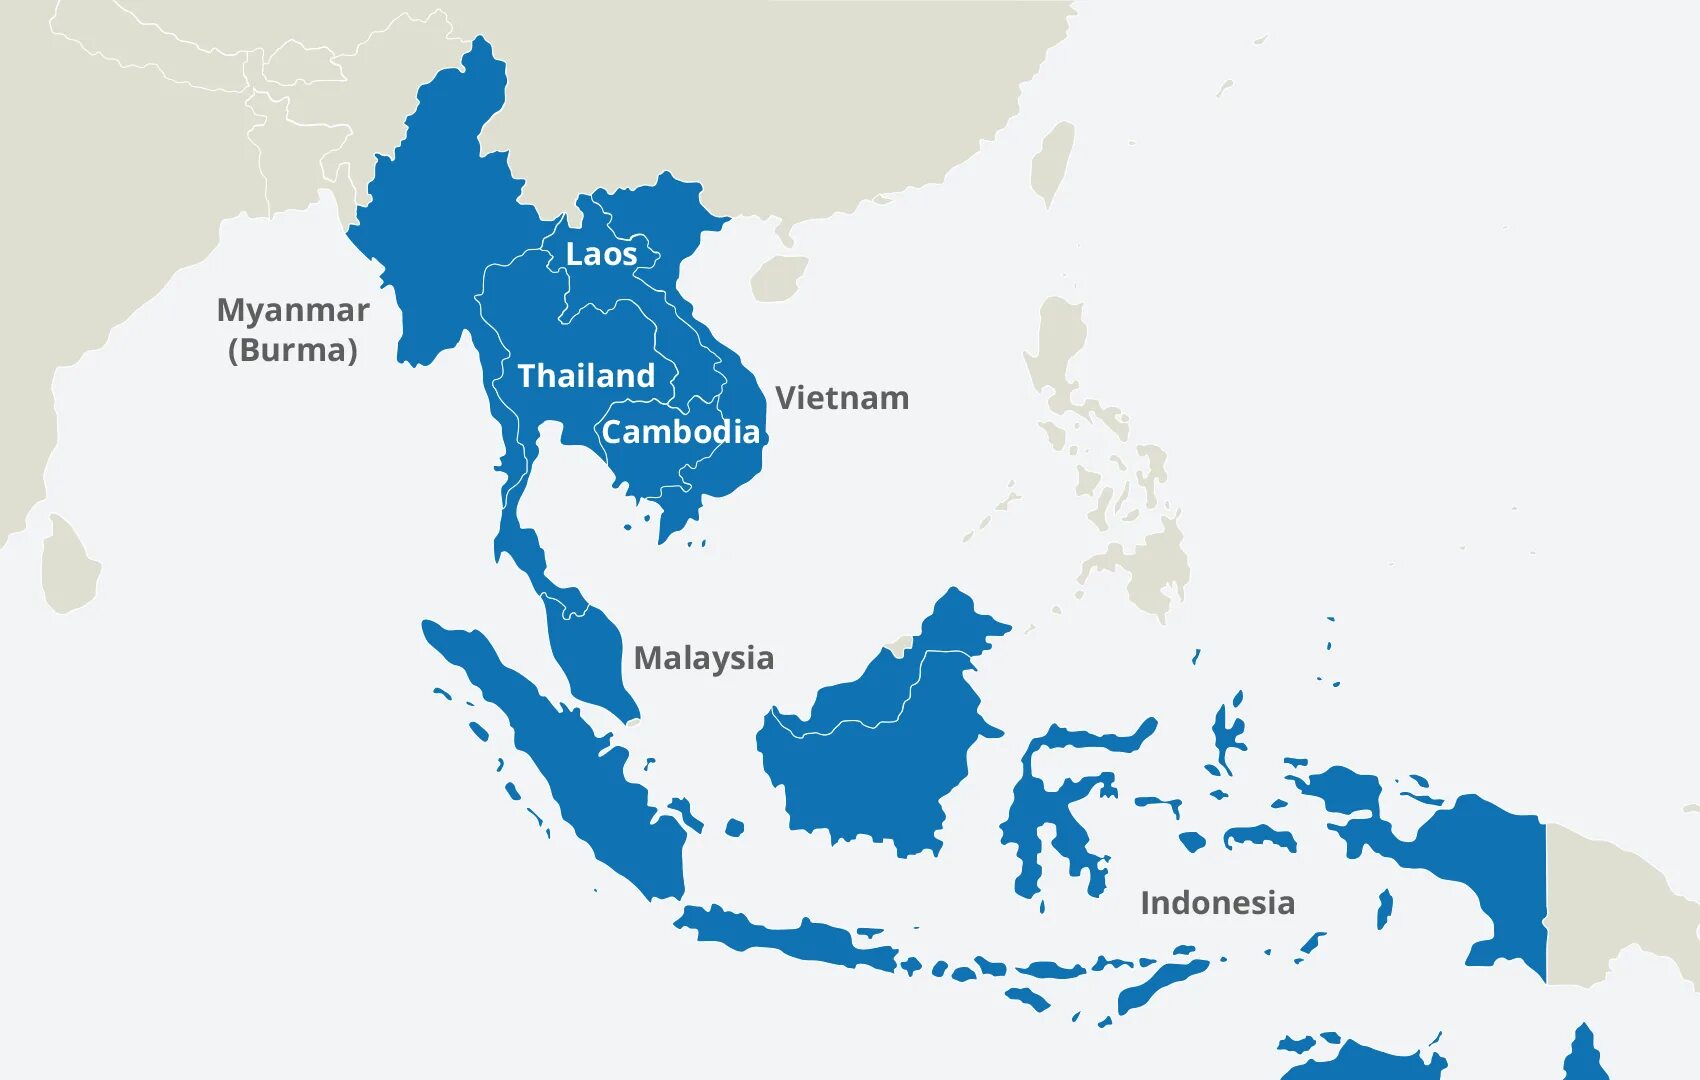 Восточная азия это какие страны. Юго-Восточная Азия на карте. Государства Юго Восточной Азии на карте. Политическая карта Юго-Восточной Азии. South East Asia Map.